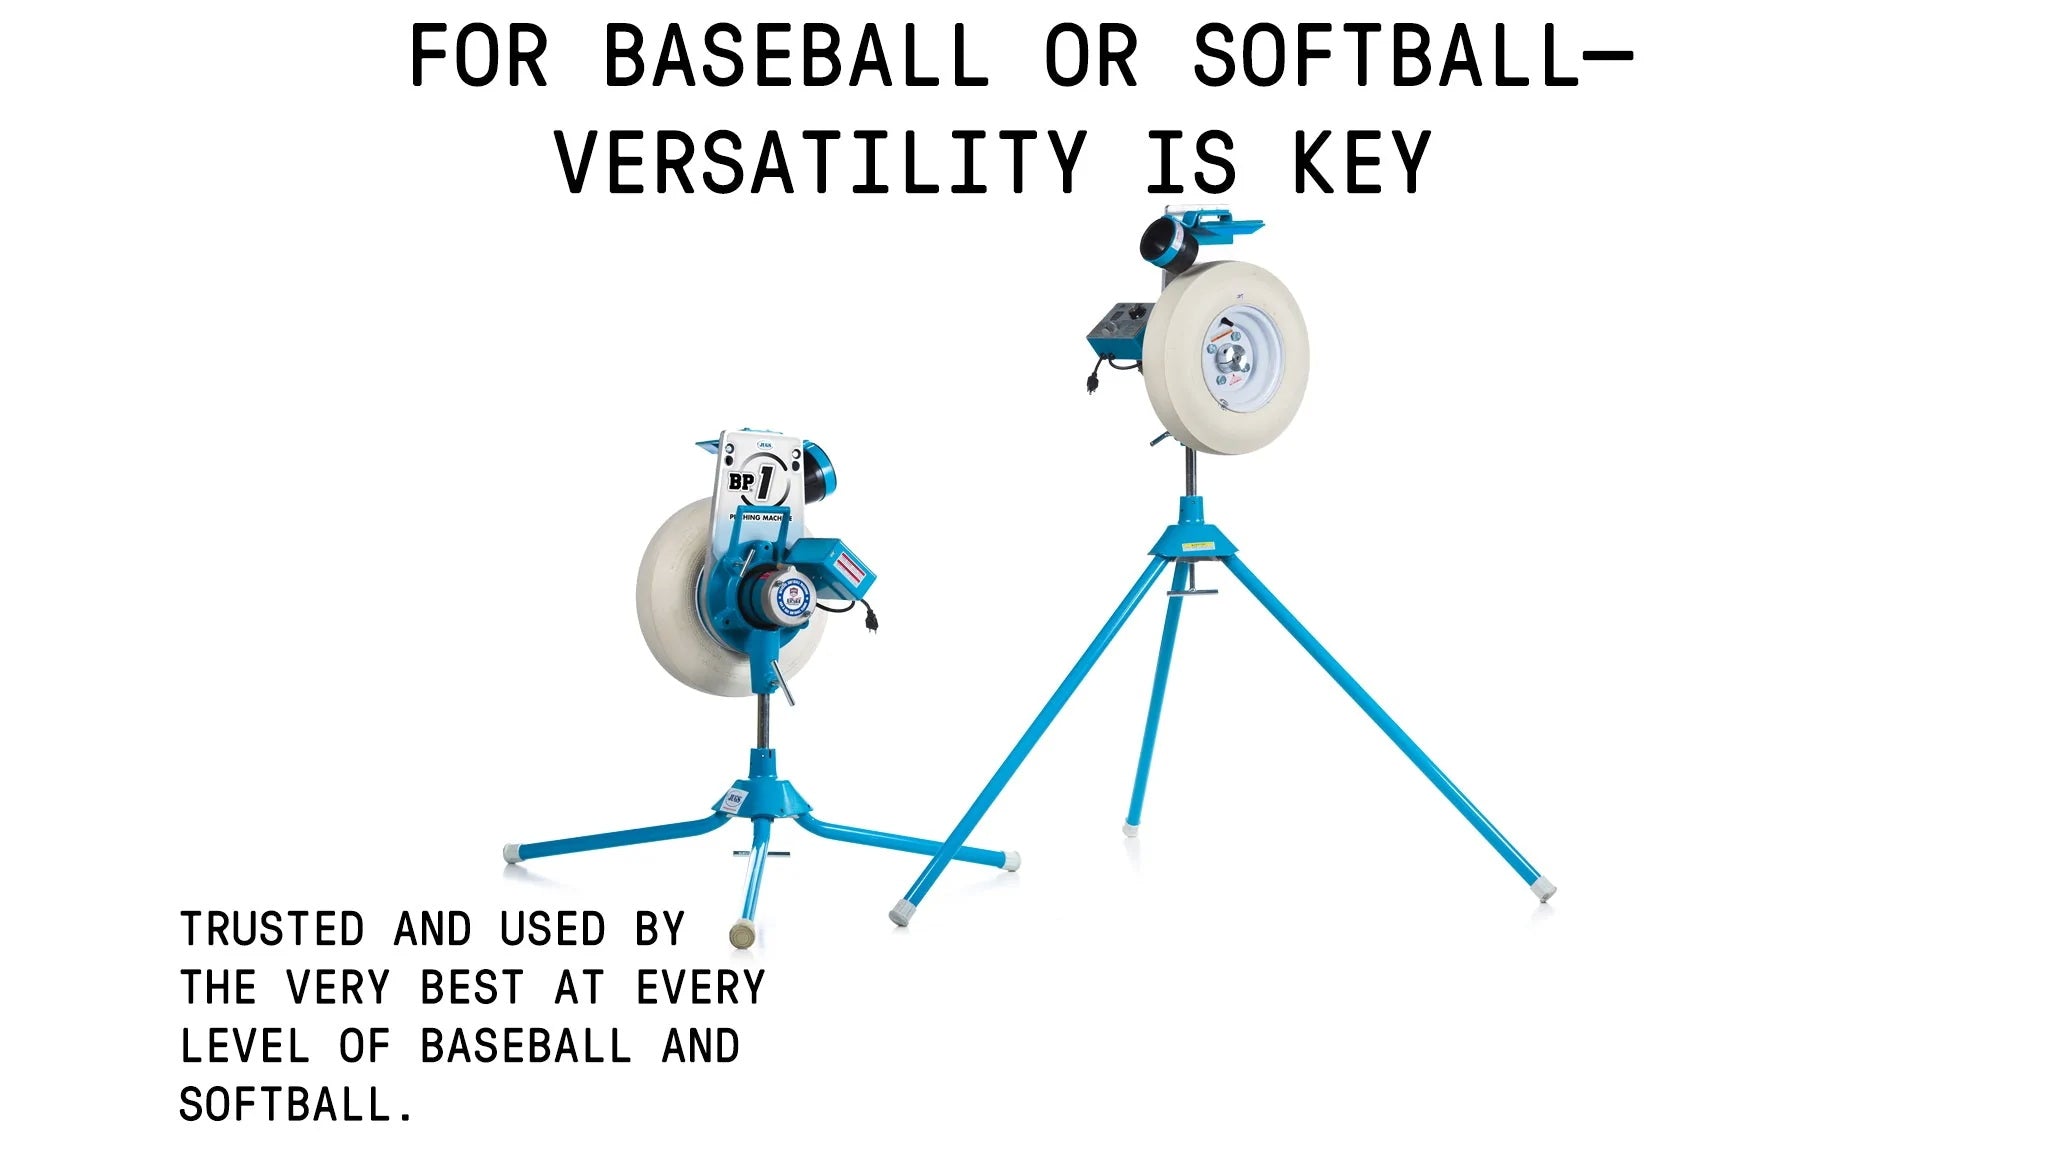 Jugs BP1 Combo Pitching Machine for Baseball or Softball